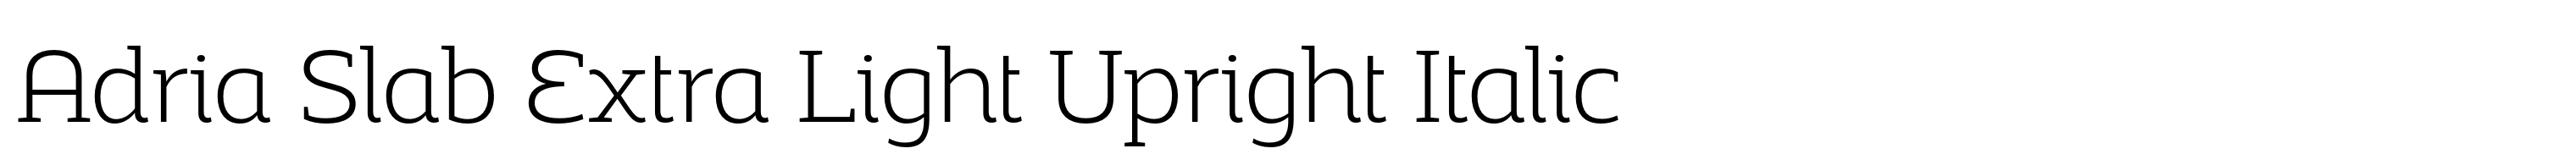 Adria Slab Extra Light Upright Italic